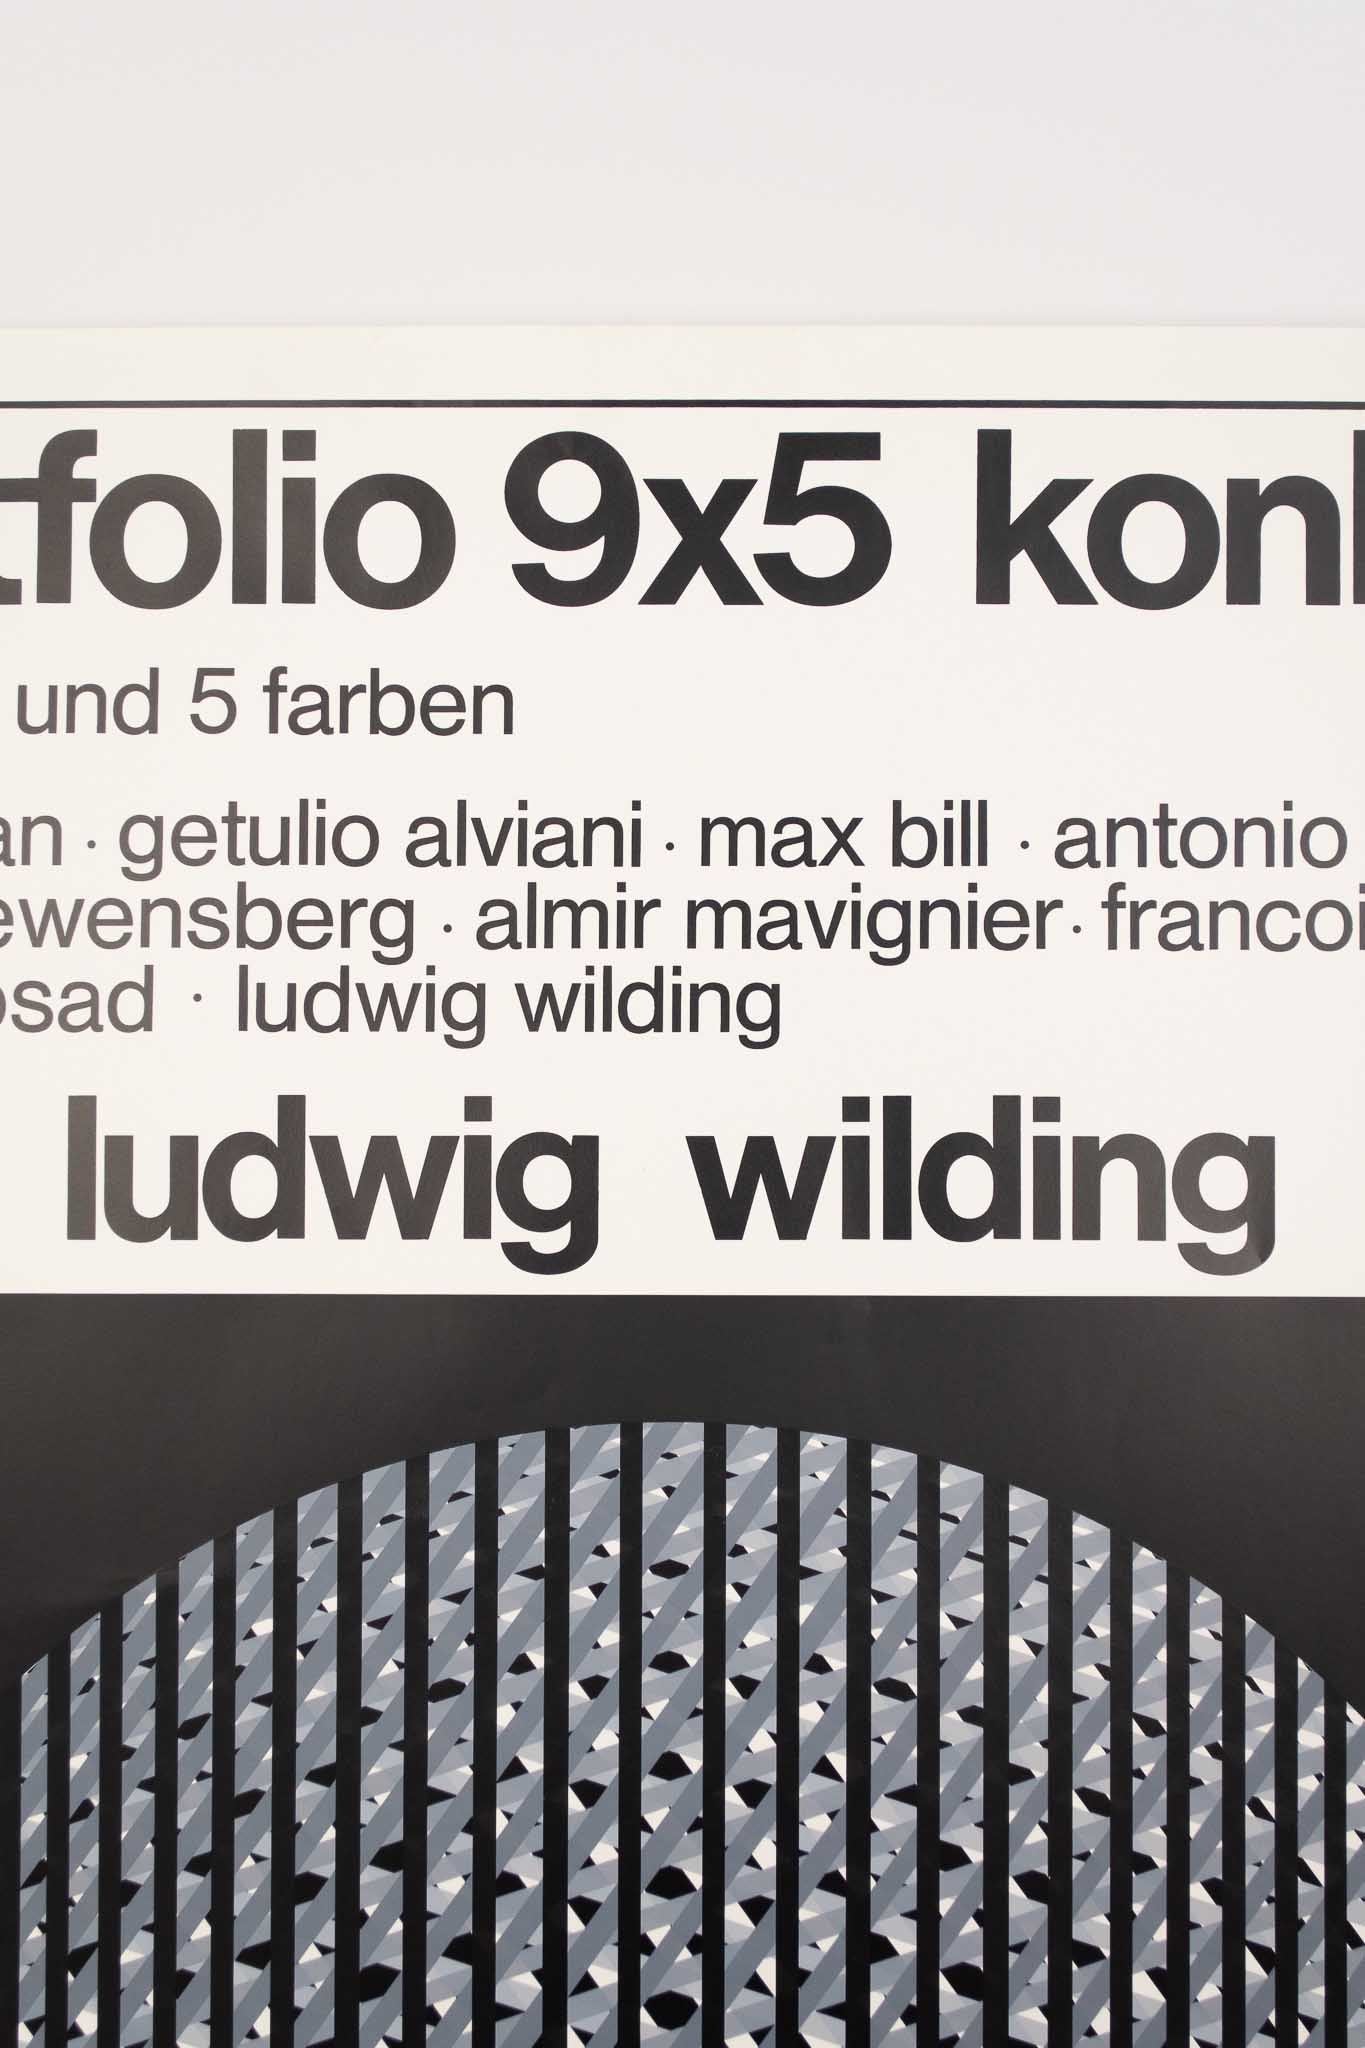 Ludwig Wilding "portfolio 9x5 konkret"  Print